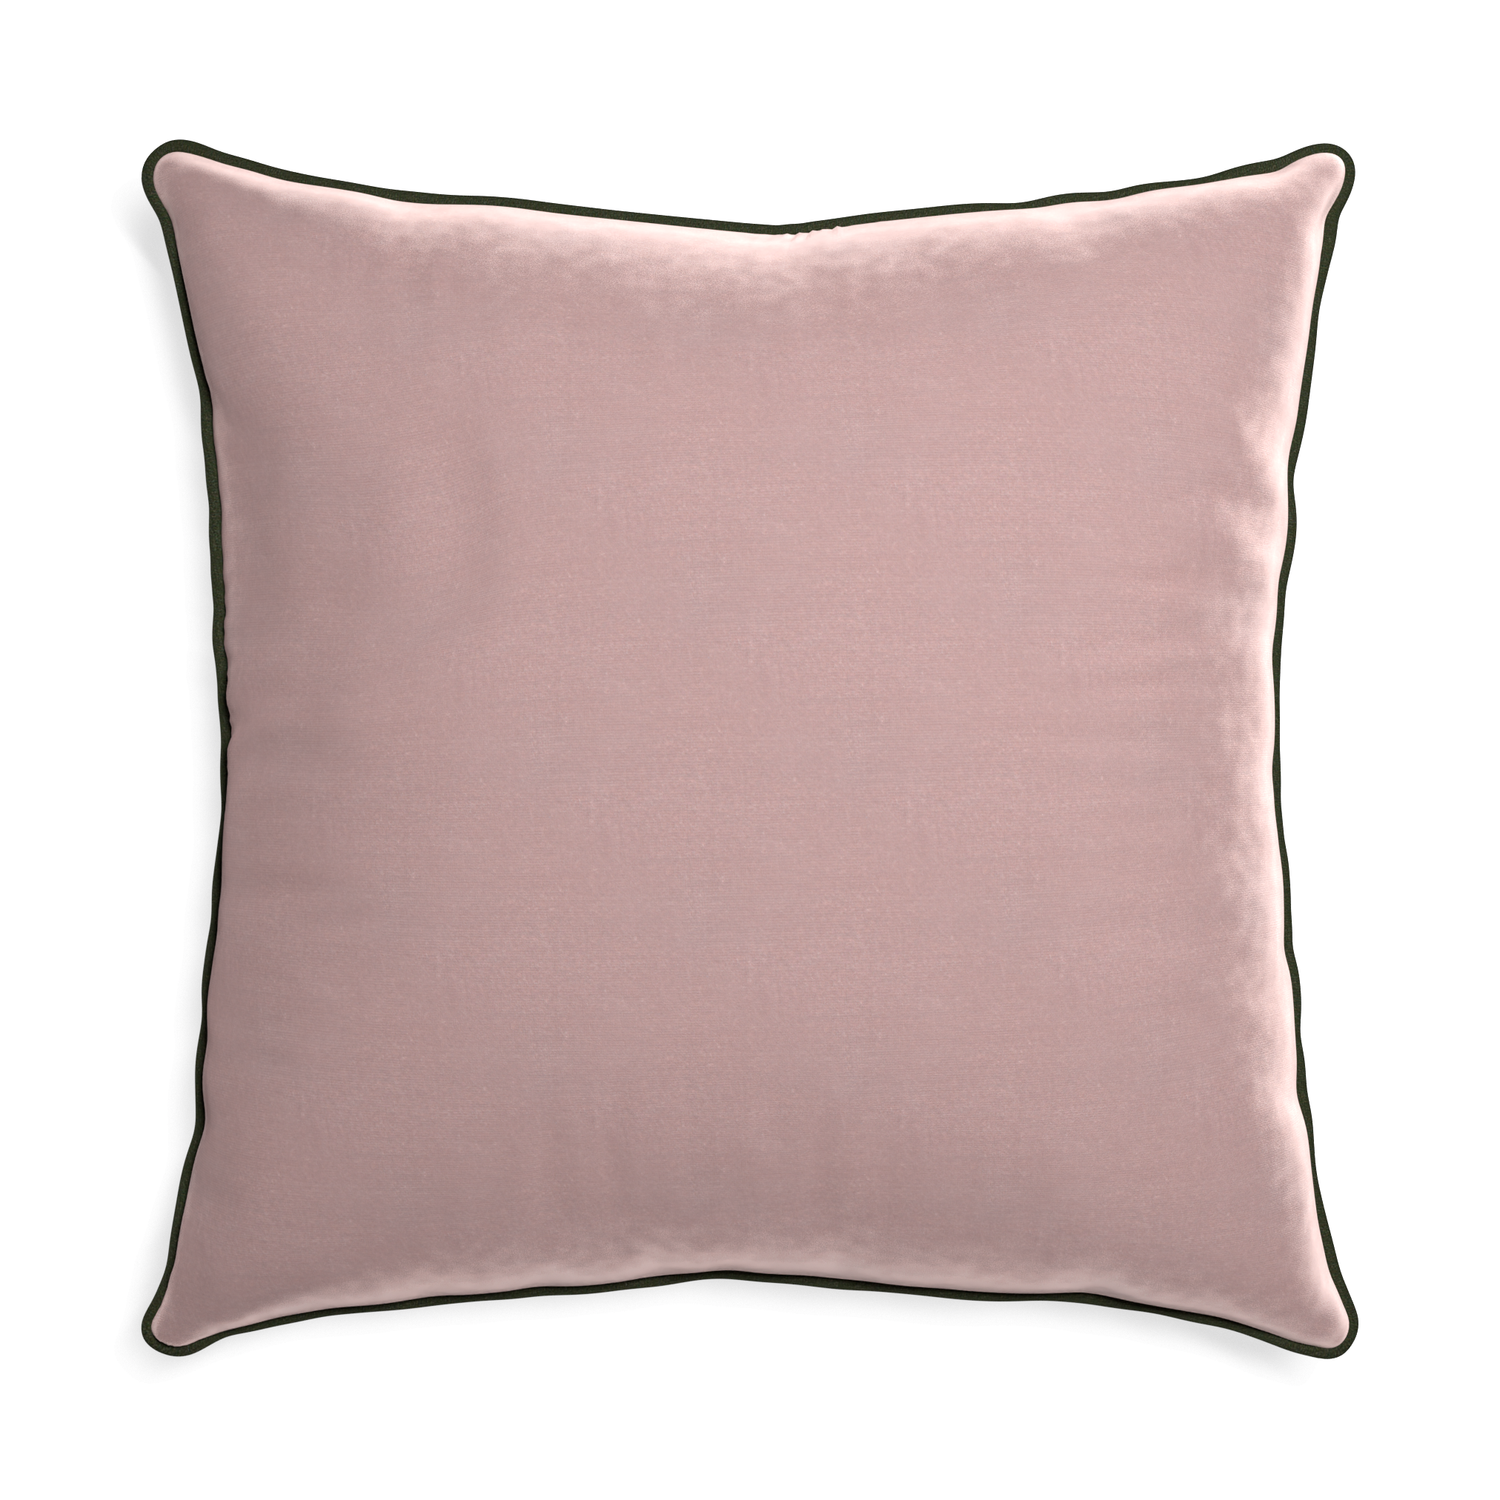 Euro-sham mauve velvet custom pillow with f piping on white background